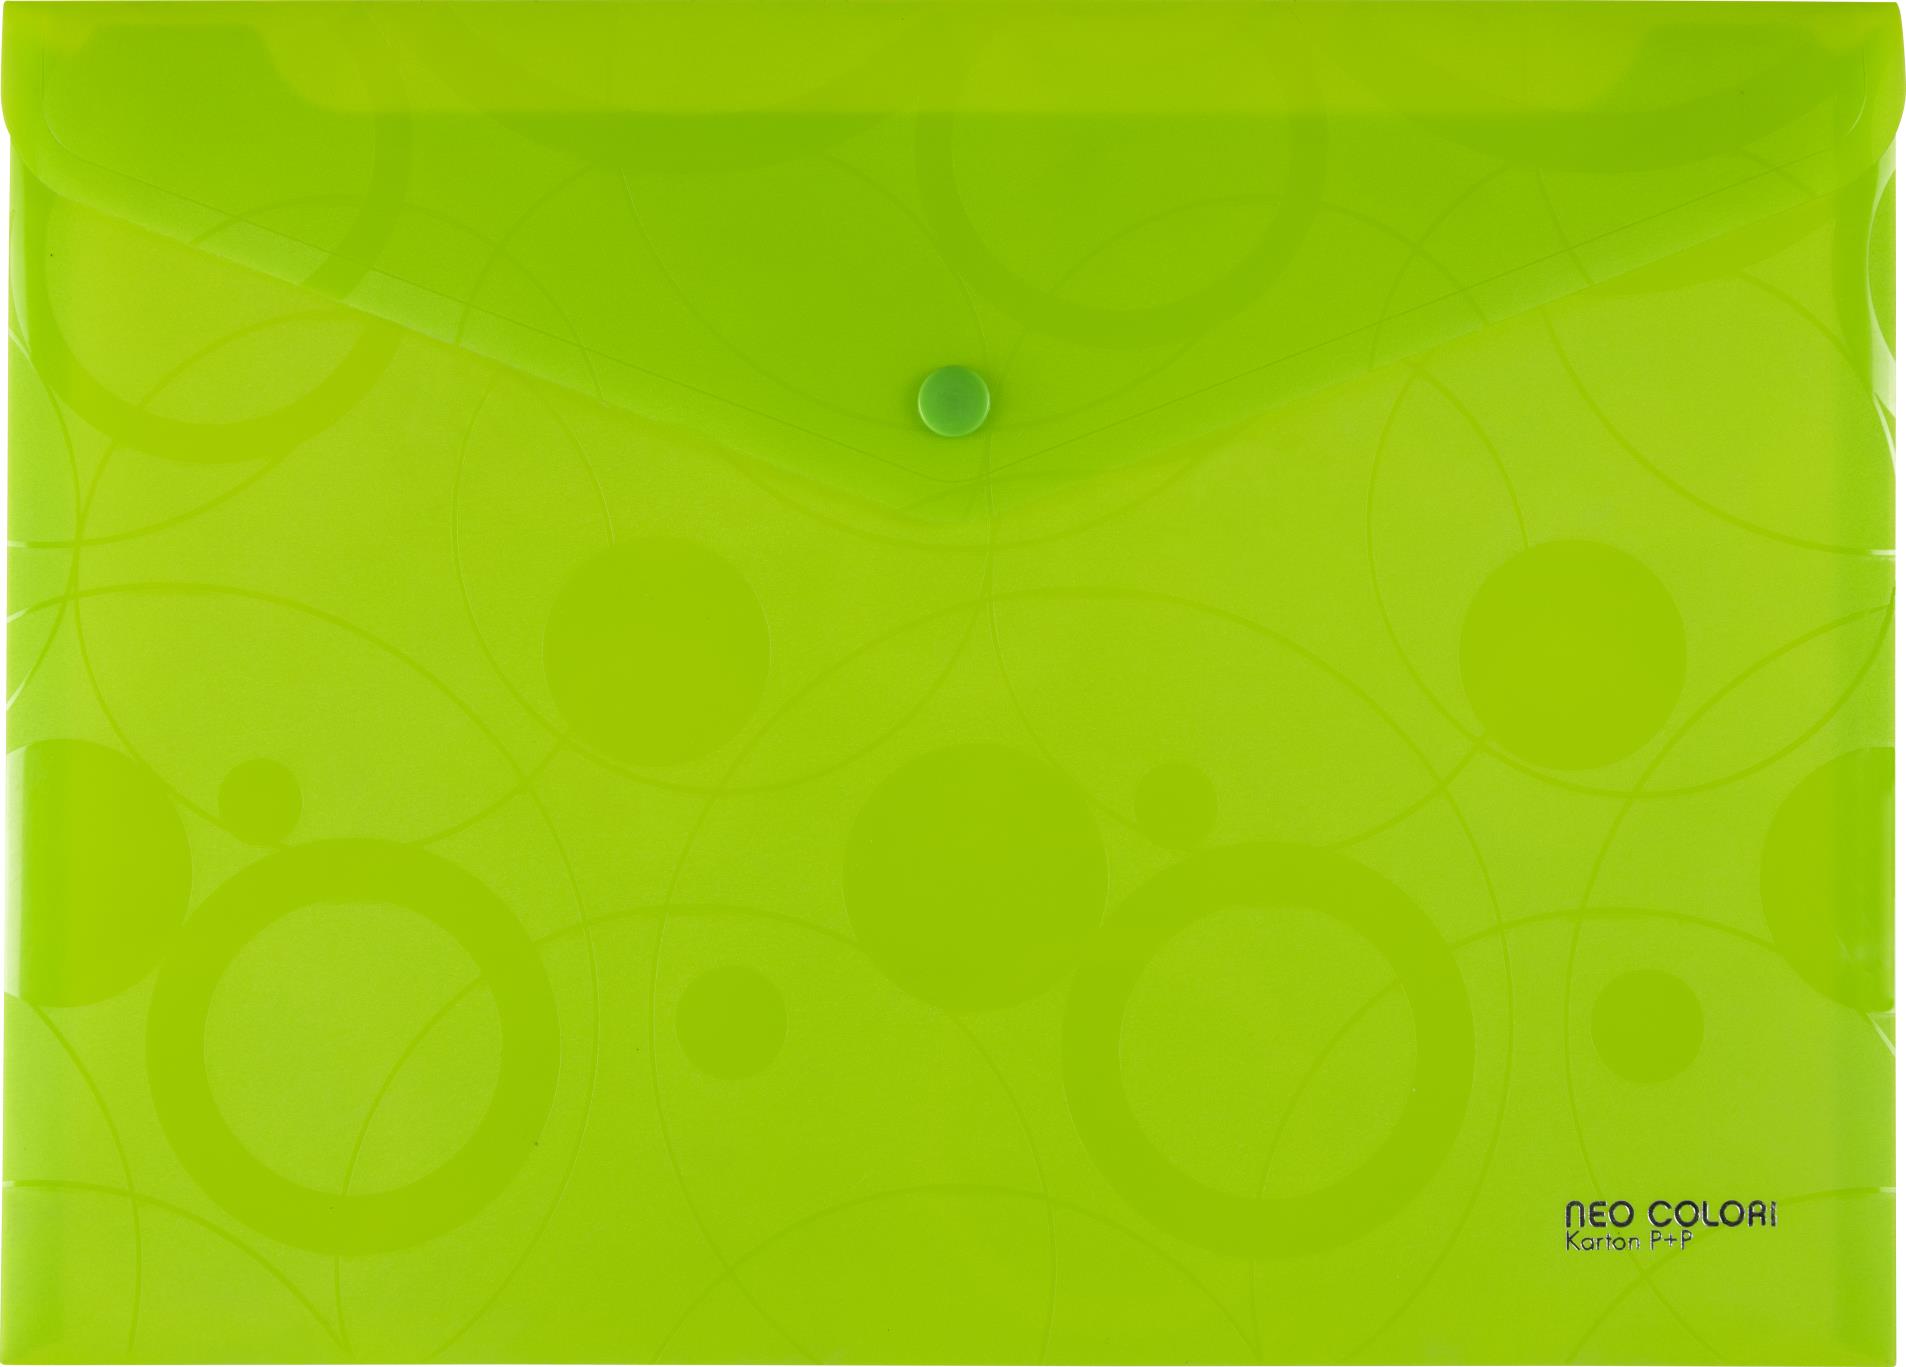 Neo Colori Spisové desky s drukem NEO COLORI - A4, zelené